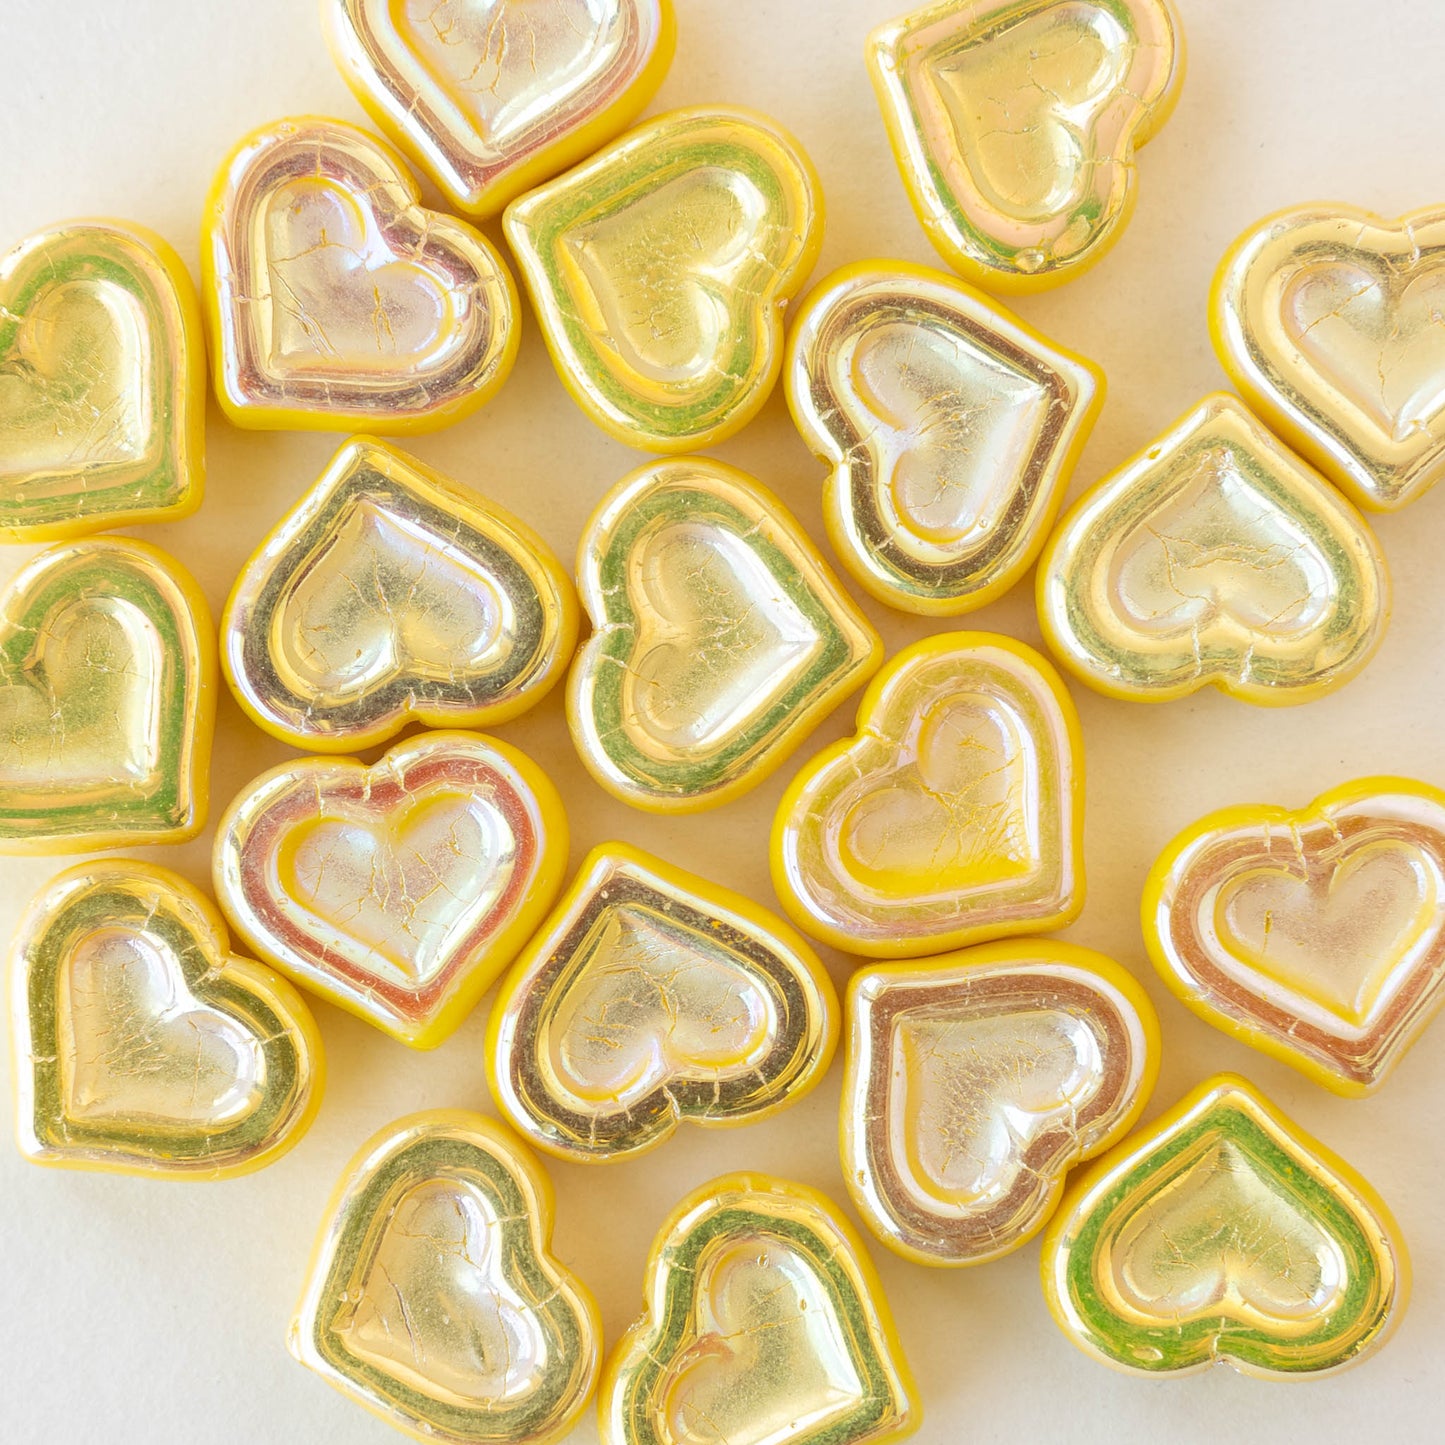 14mm Heart Beads - Mellow Yellow Iridescent AB - 10 hearts